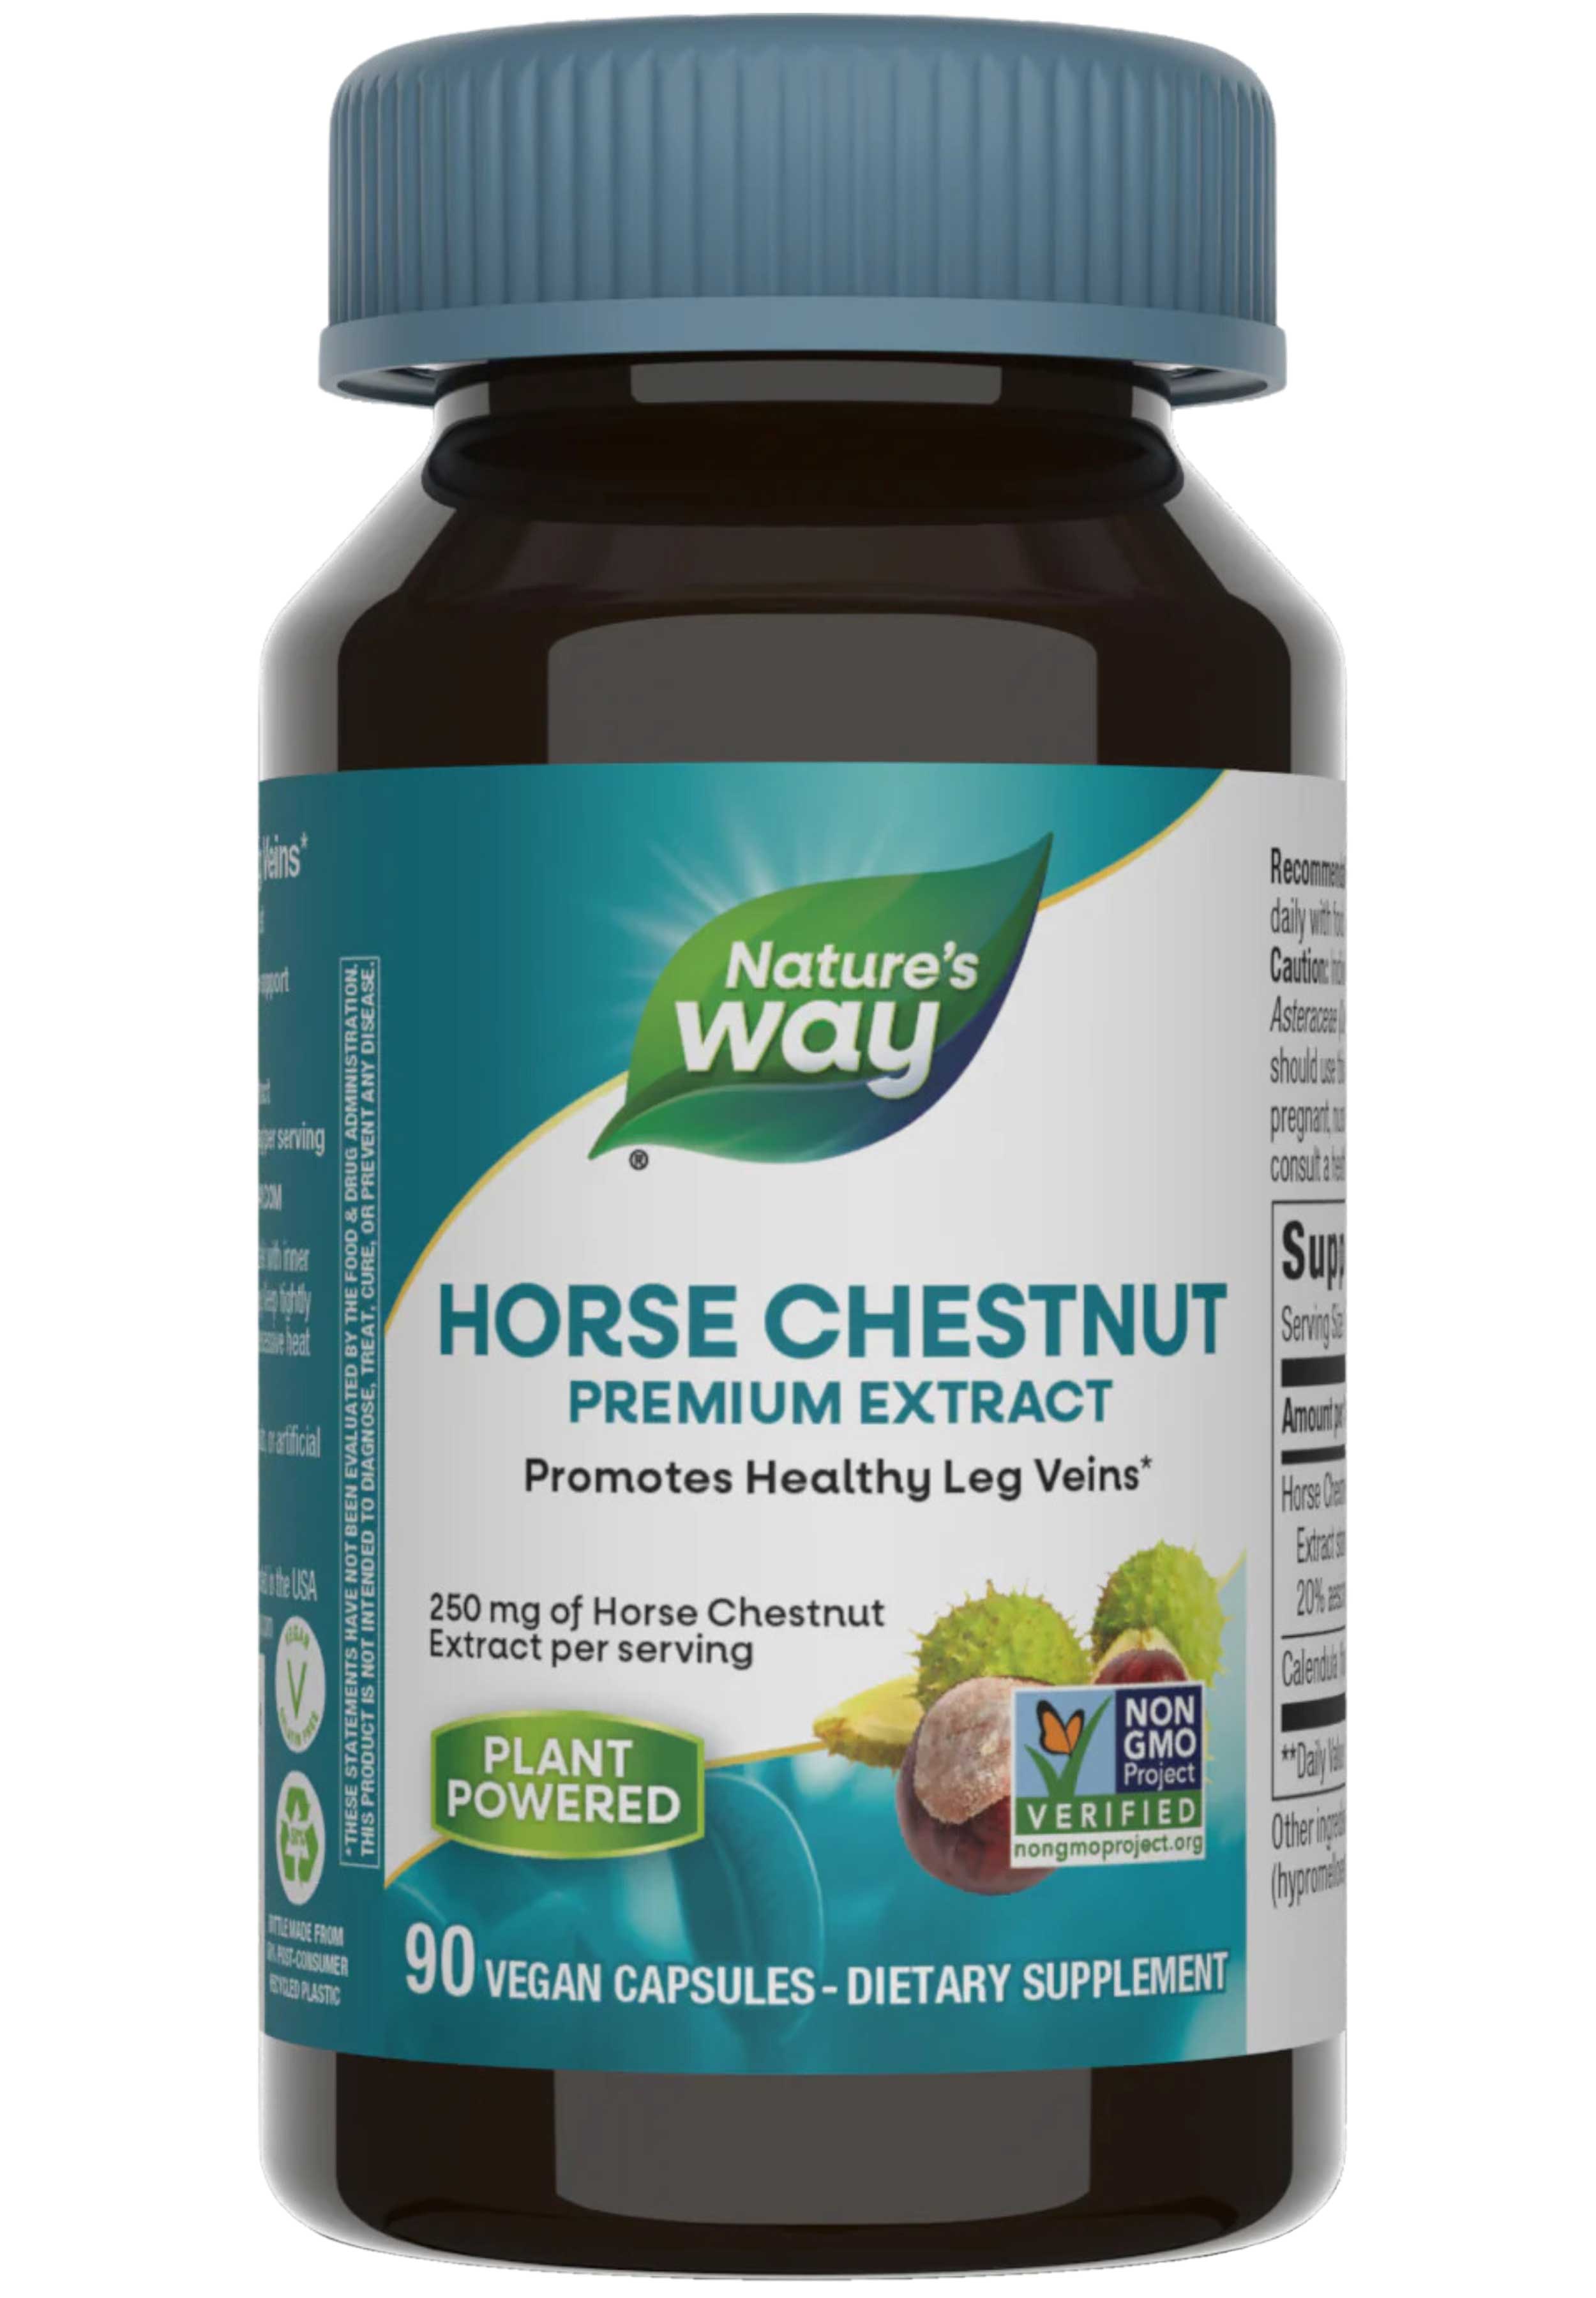 Nature's Way Horse Chestnut Premium Extract